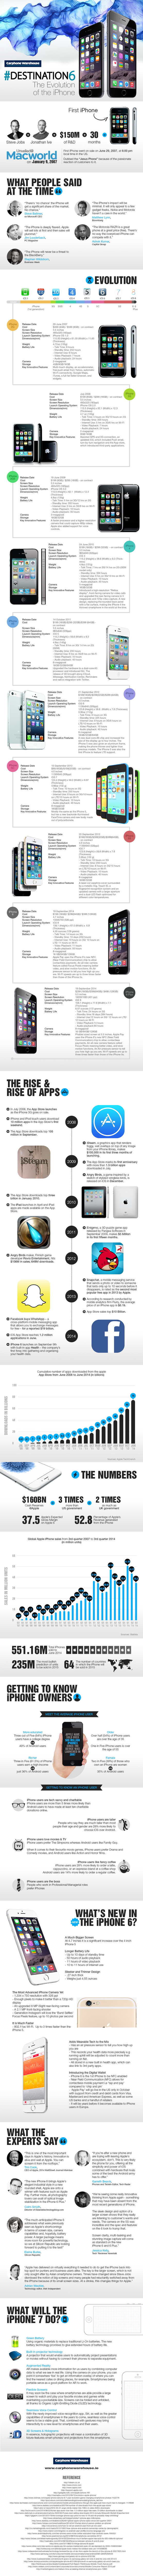 Инфографика: эволюция iPhone